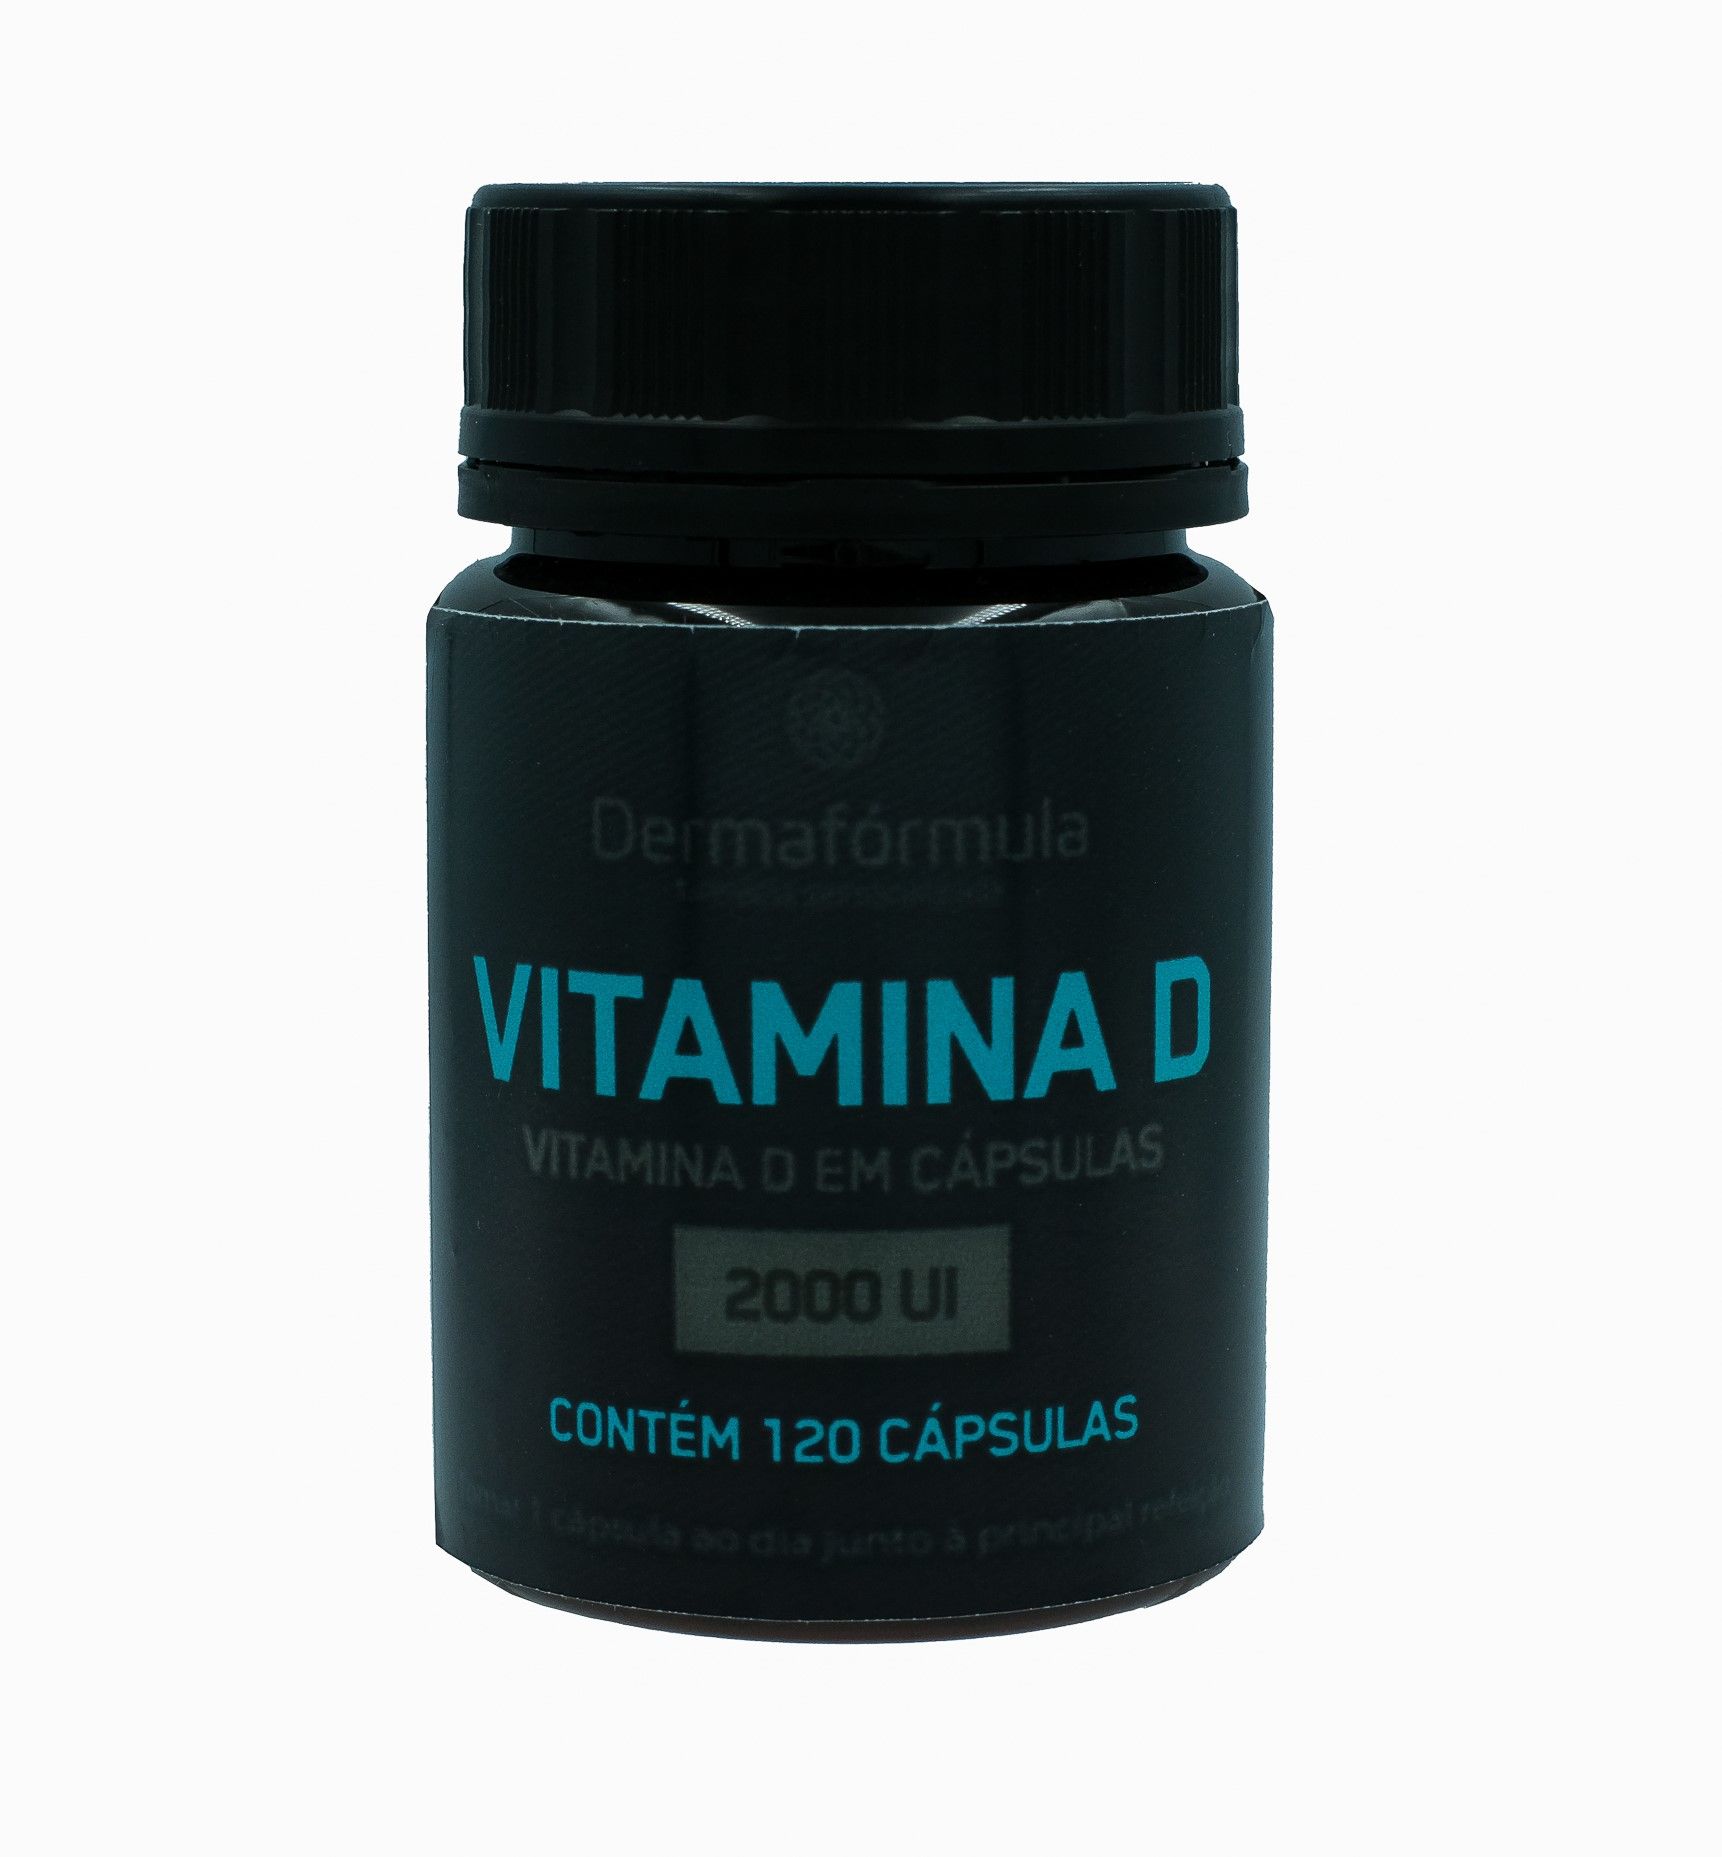 Imagem do Vitamina D